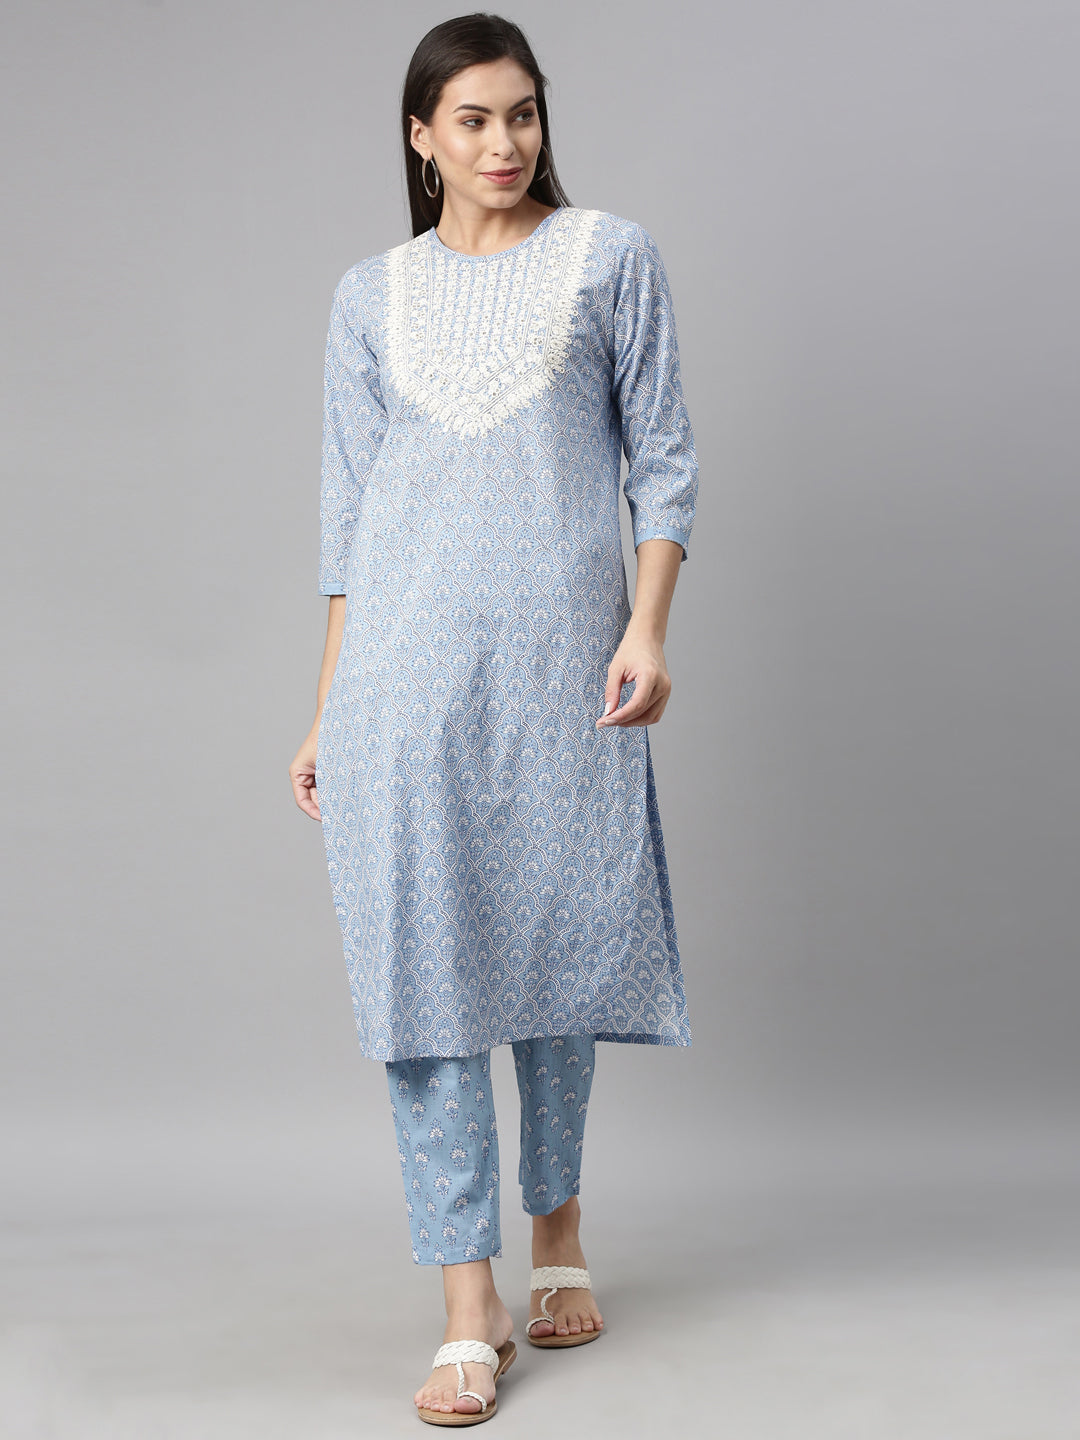 Neeru's Blue Color Cotton Fabric Kurta